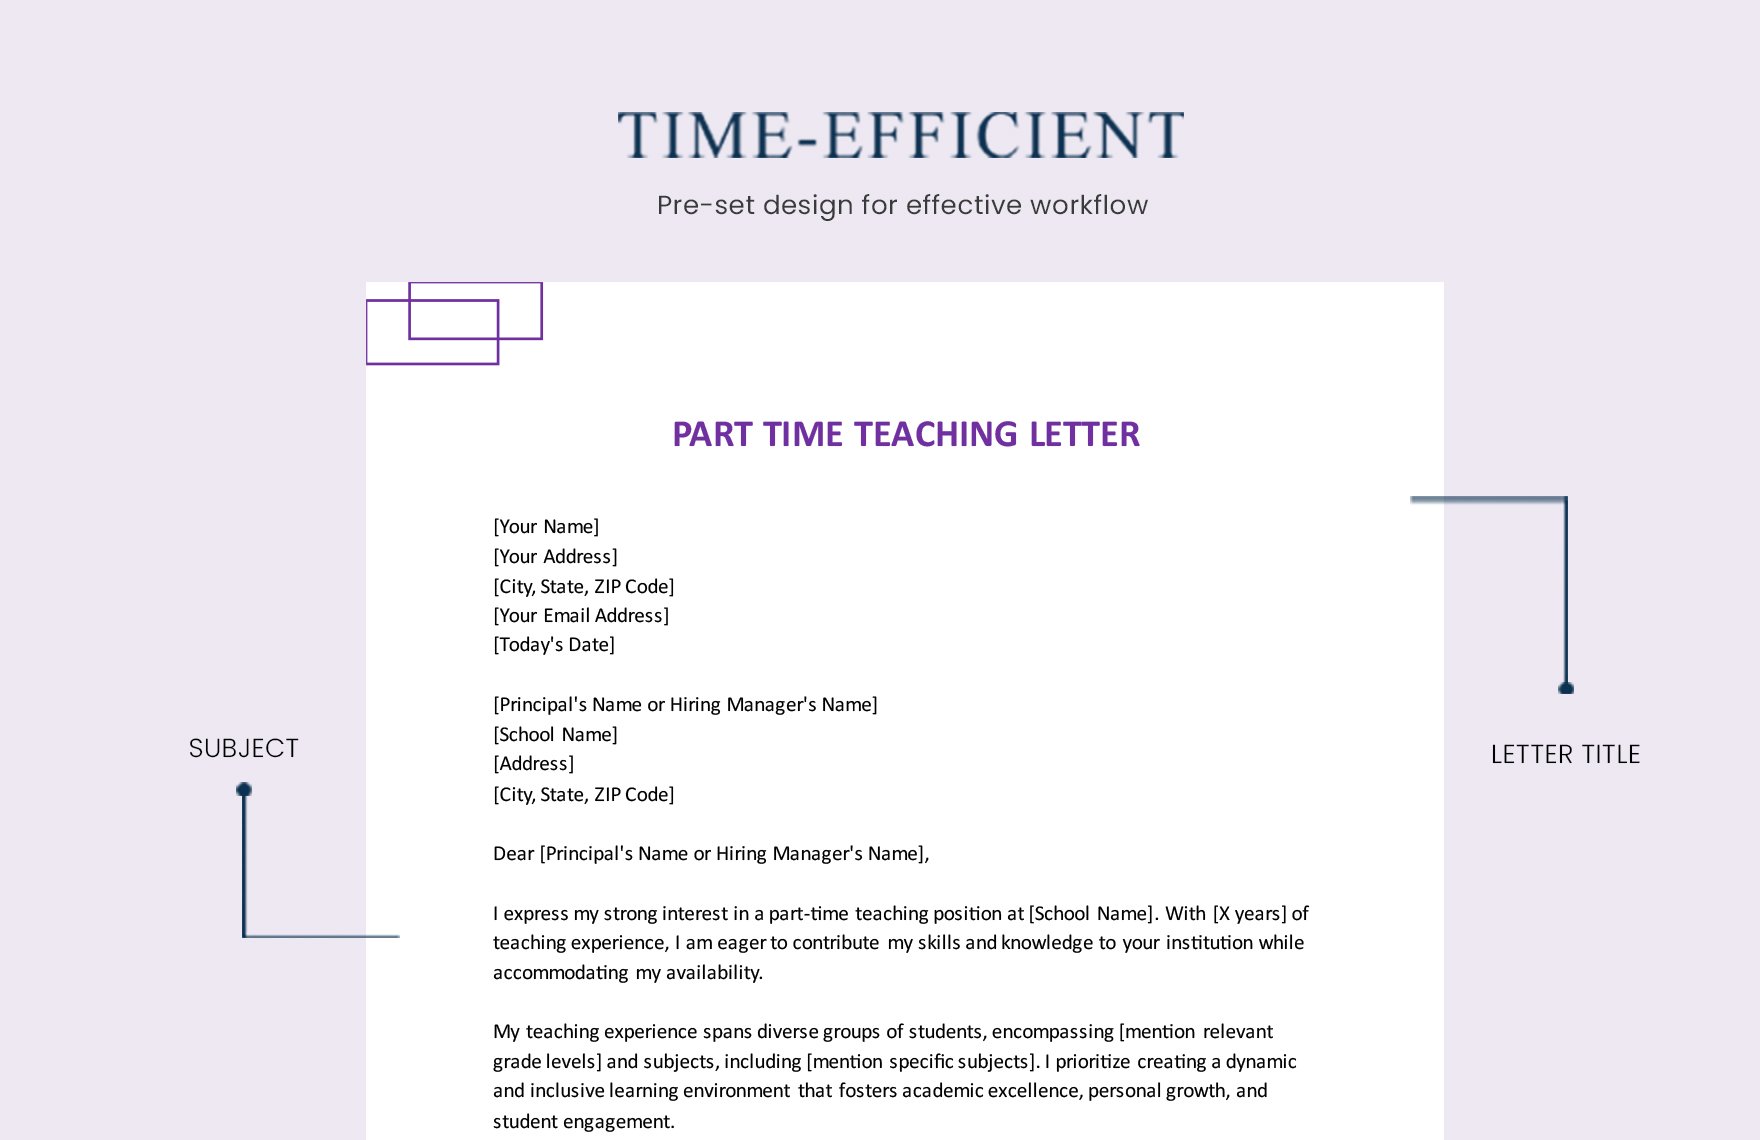 Part Time Teaching Letter